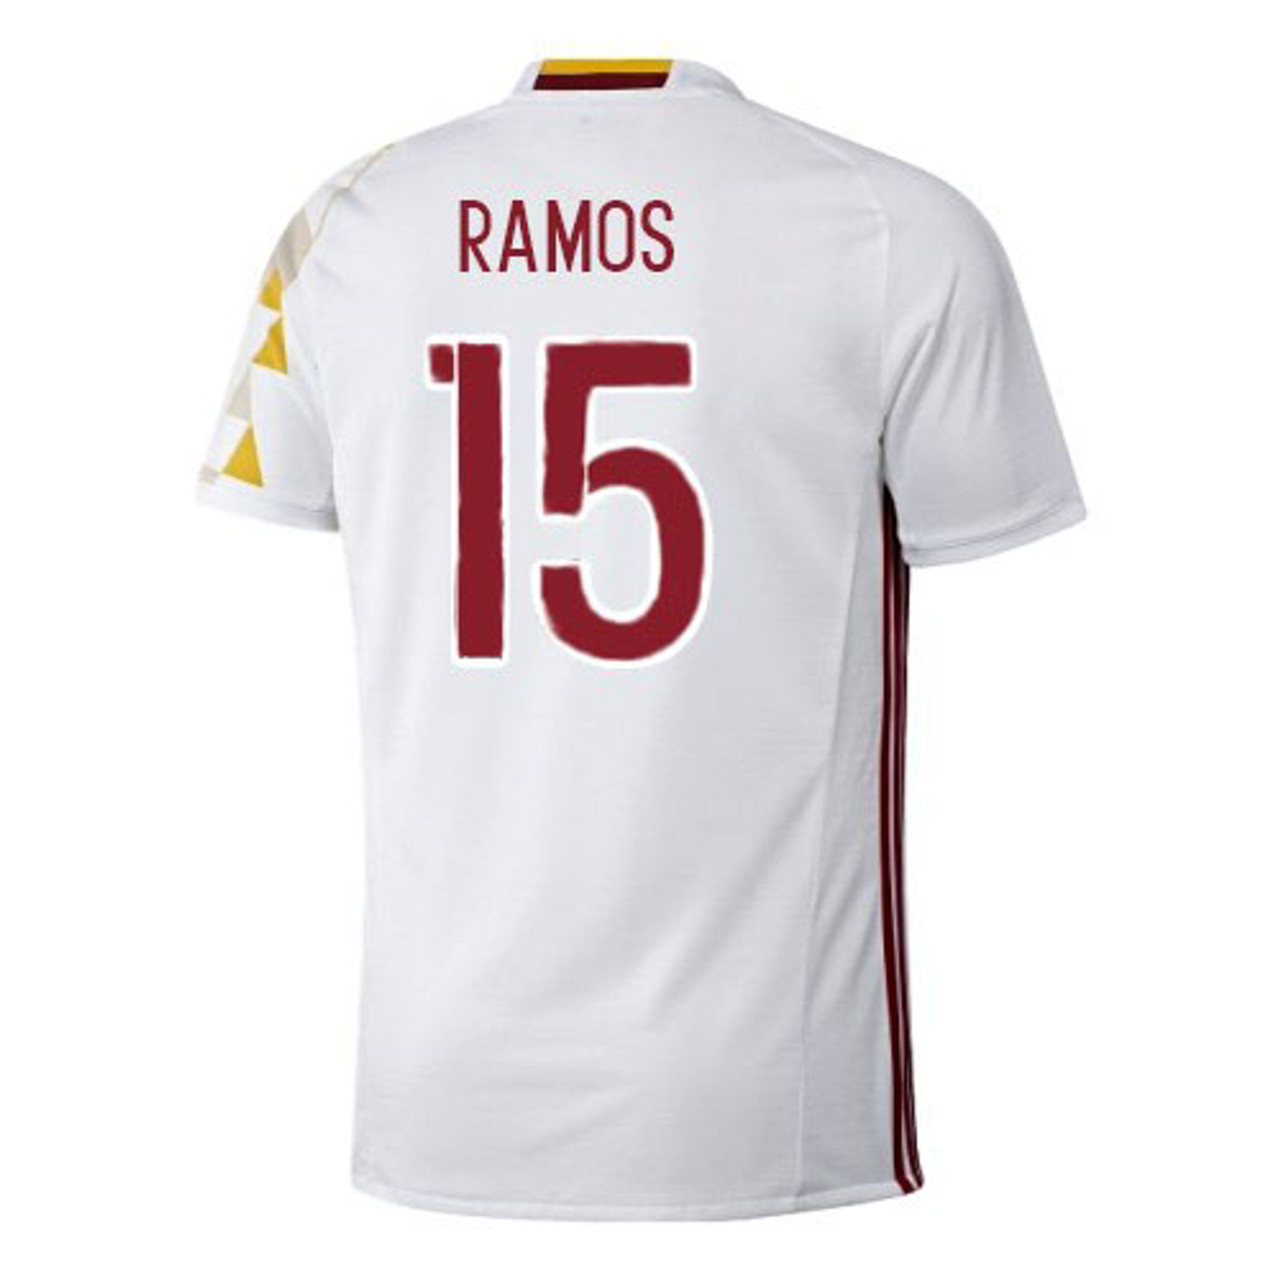 ADIDAS SPAIN 2016 RAMOS AWAY - Soccer